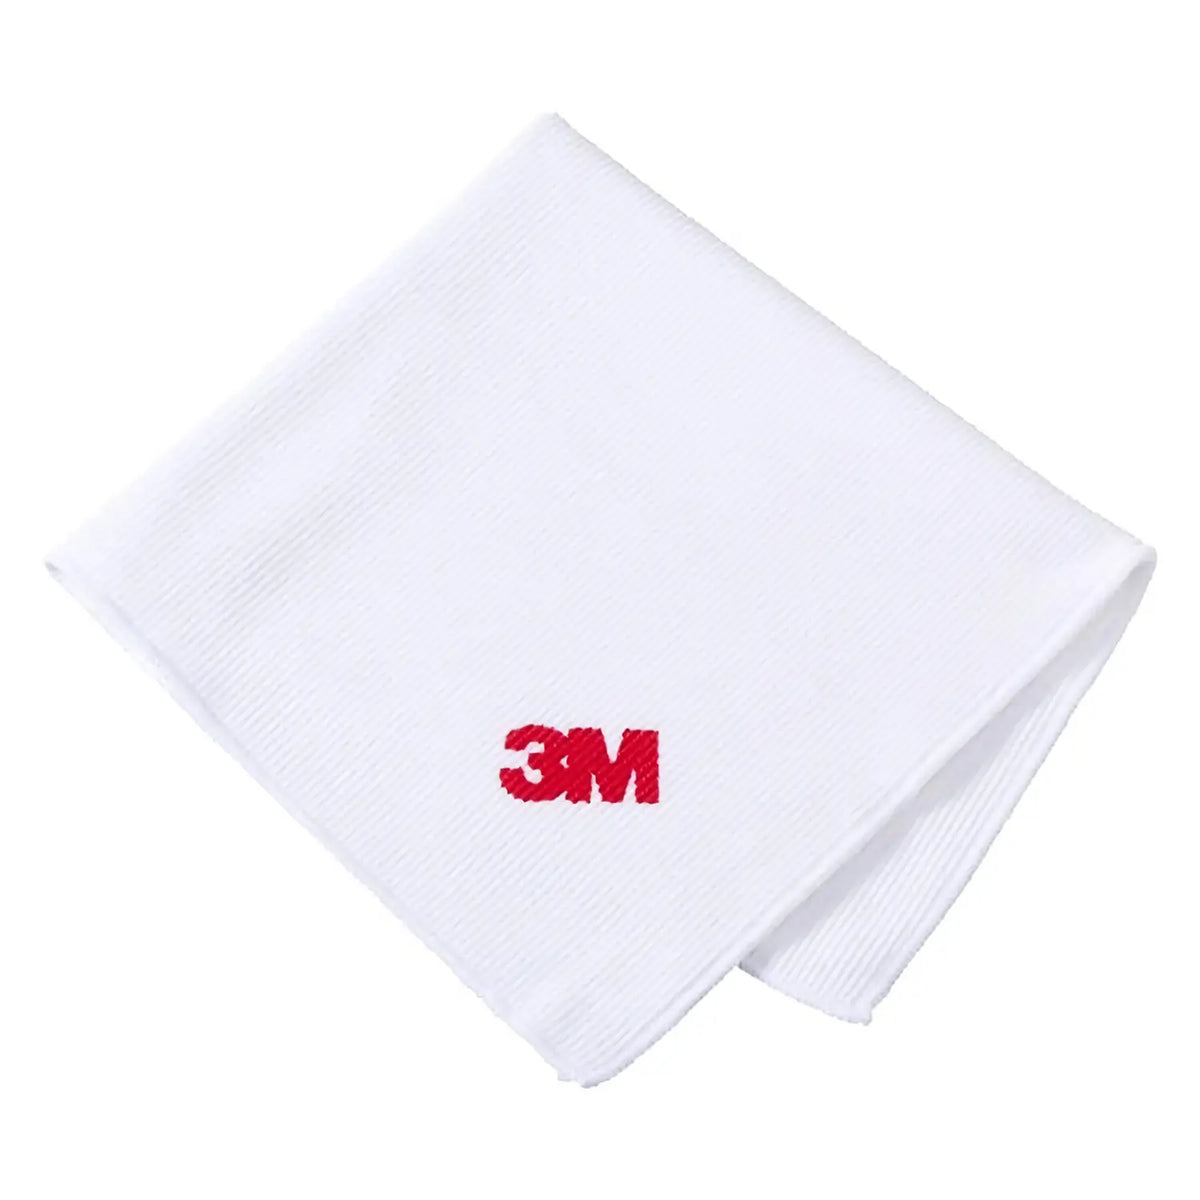 3M Scotch-Brite Nylon High Functionality Wiping Cloth